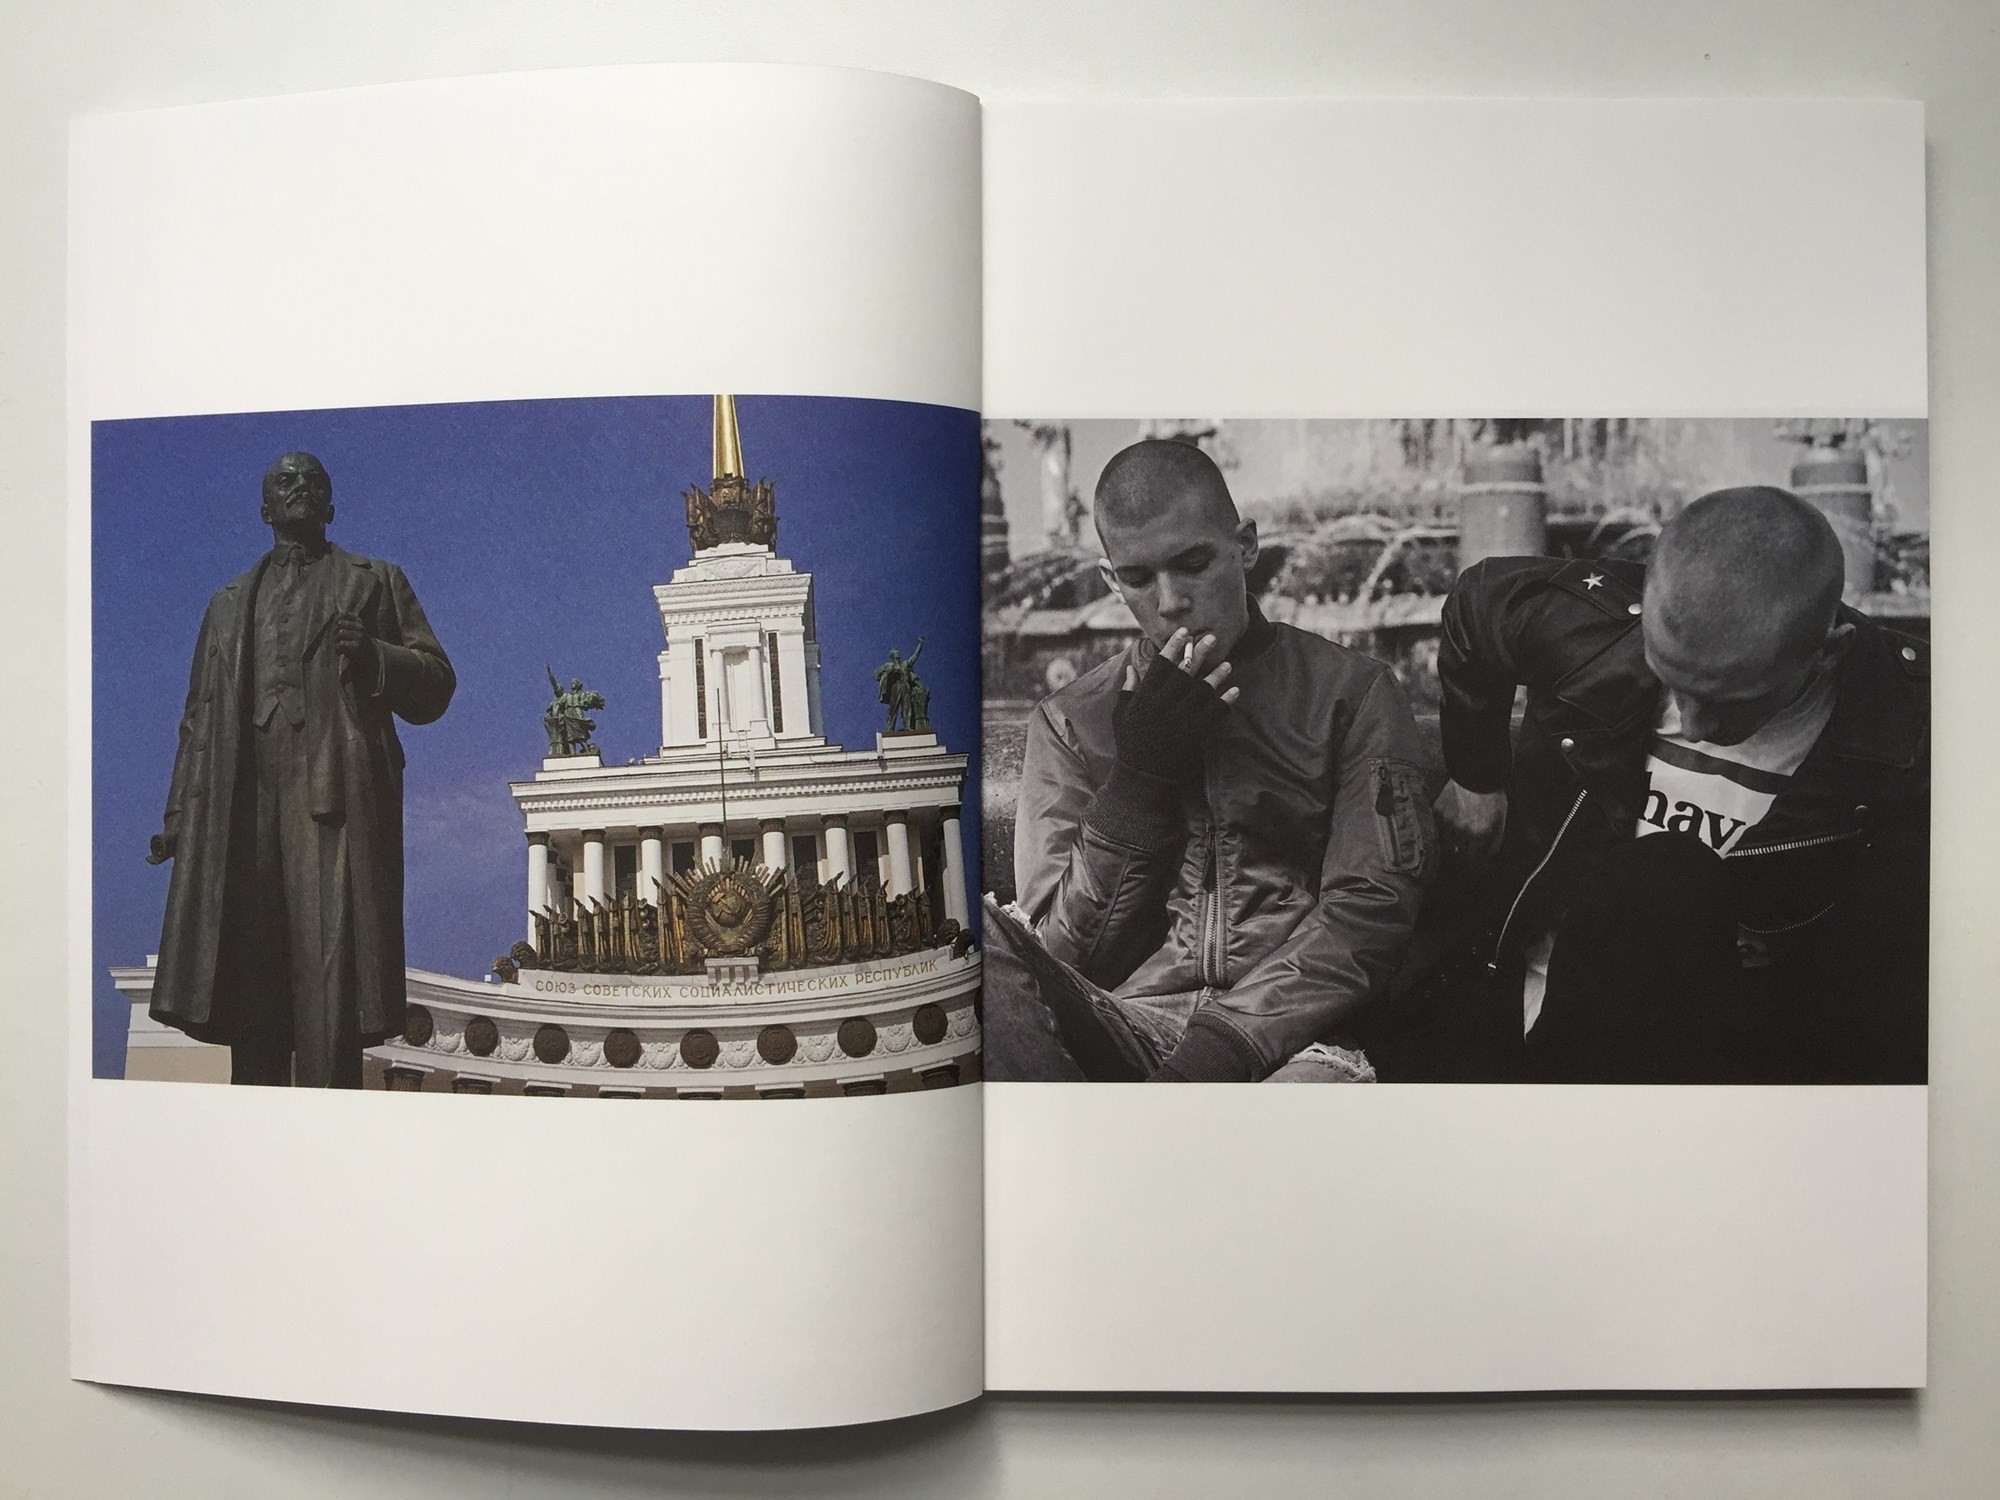 Peep Gosha Rubchinskiy's new photo book ahead of its release | Dazed